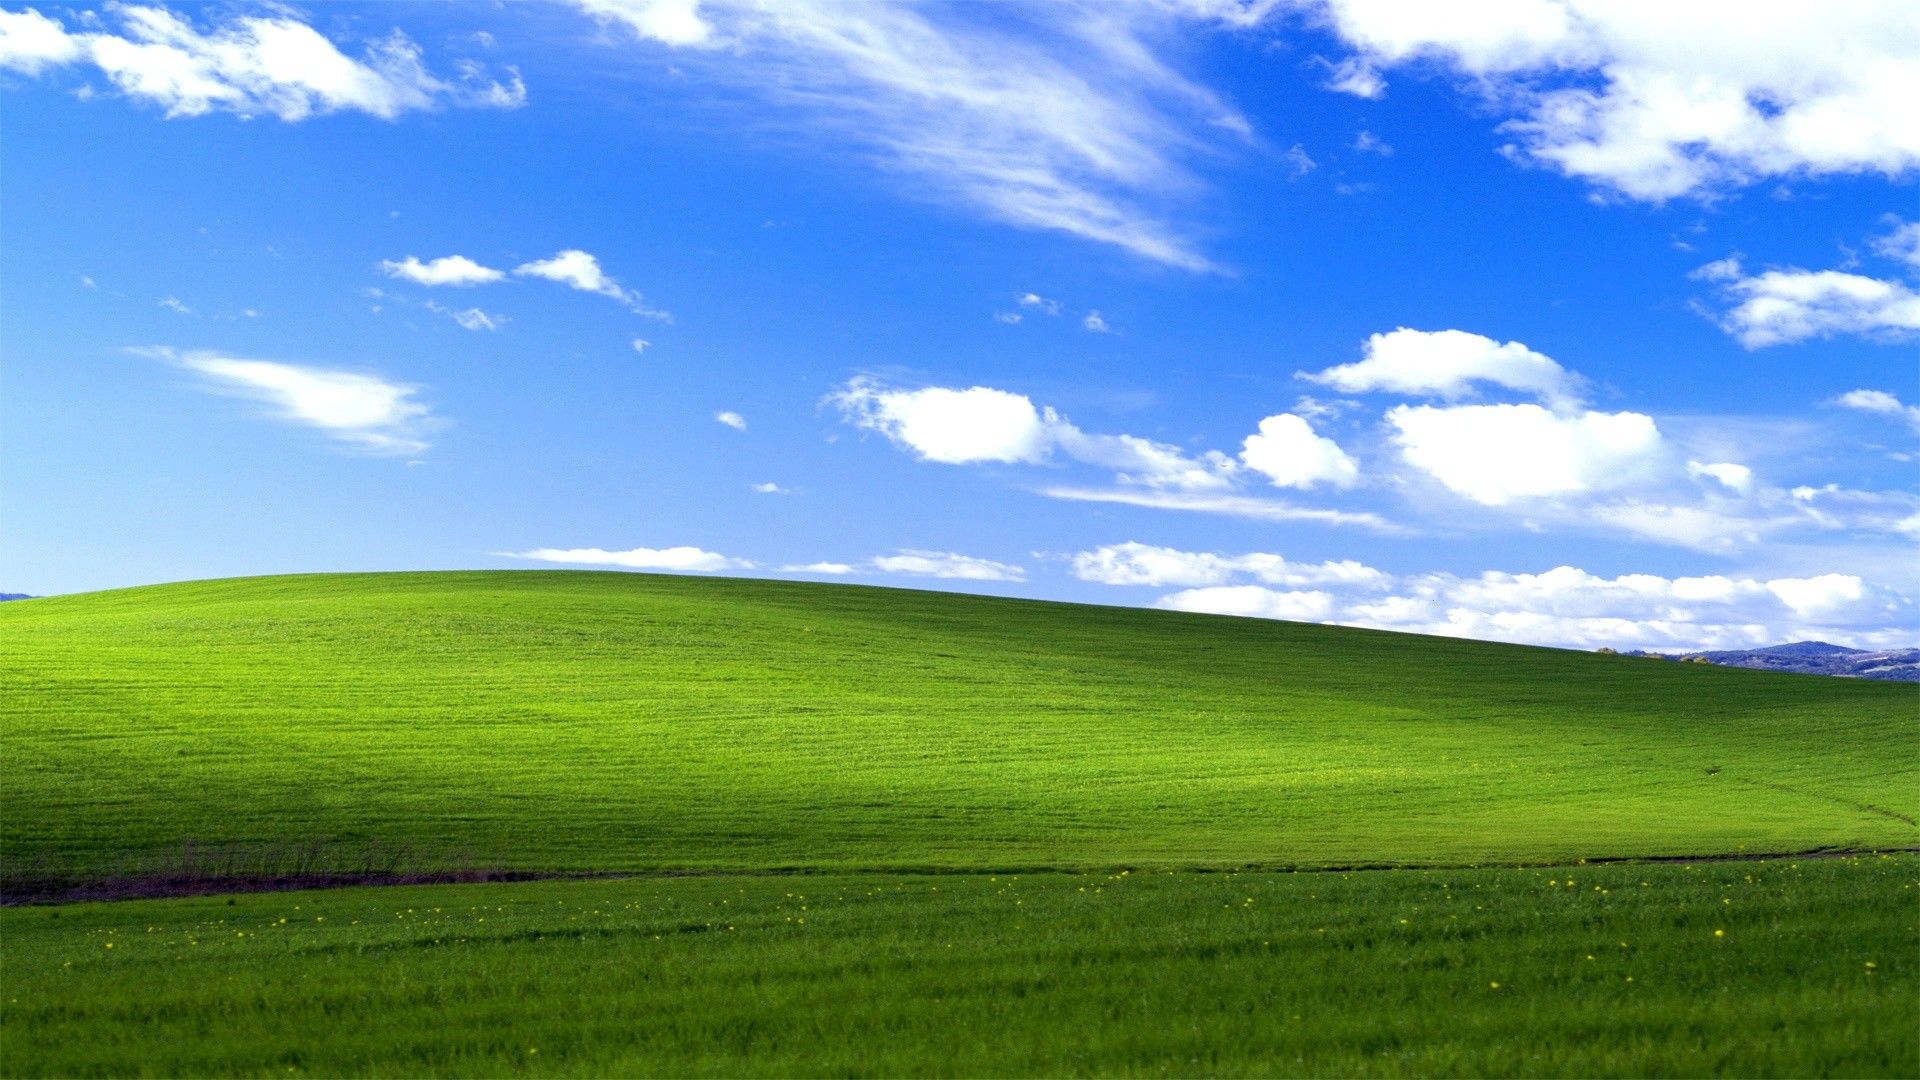 999+ Old Windows background 4k đẹp nhất cho fan hâm mộ Windows